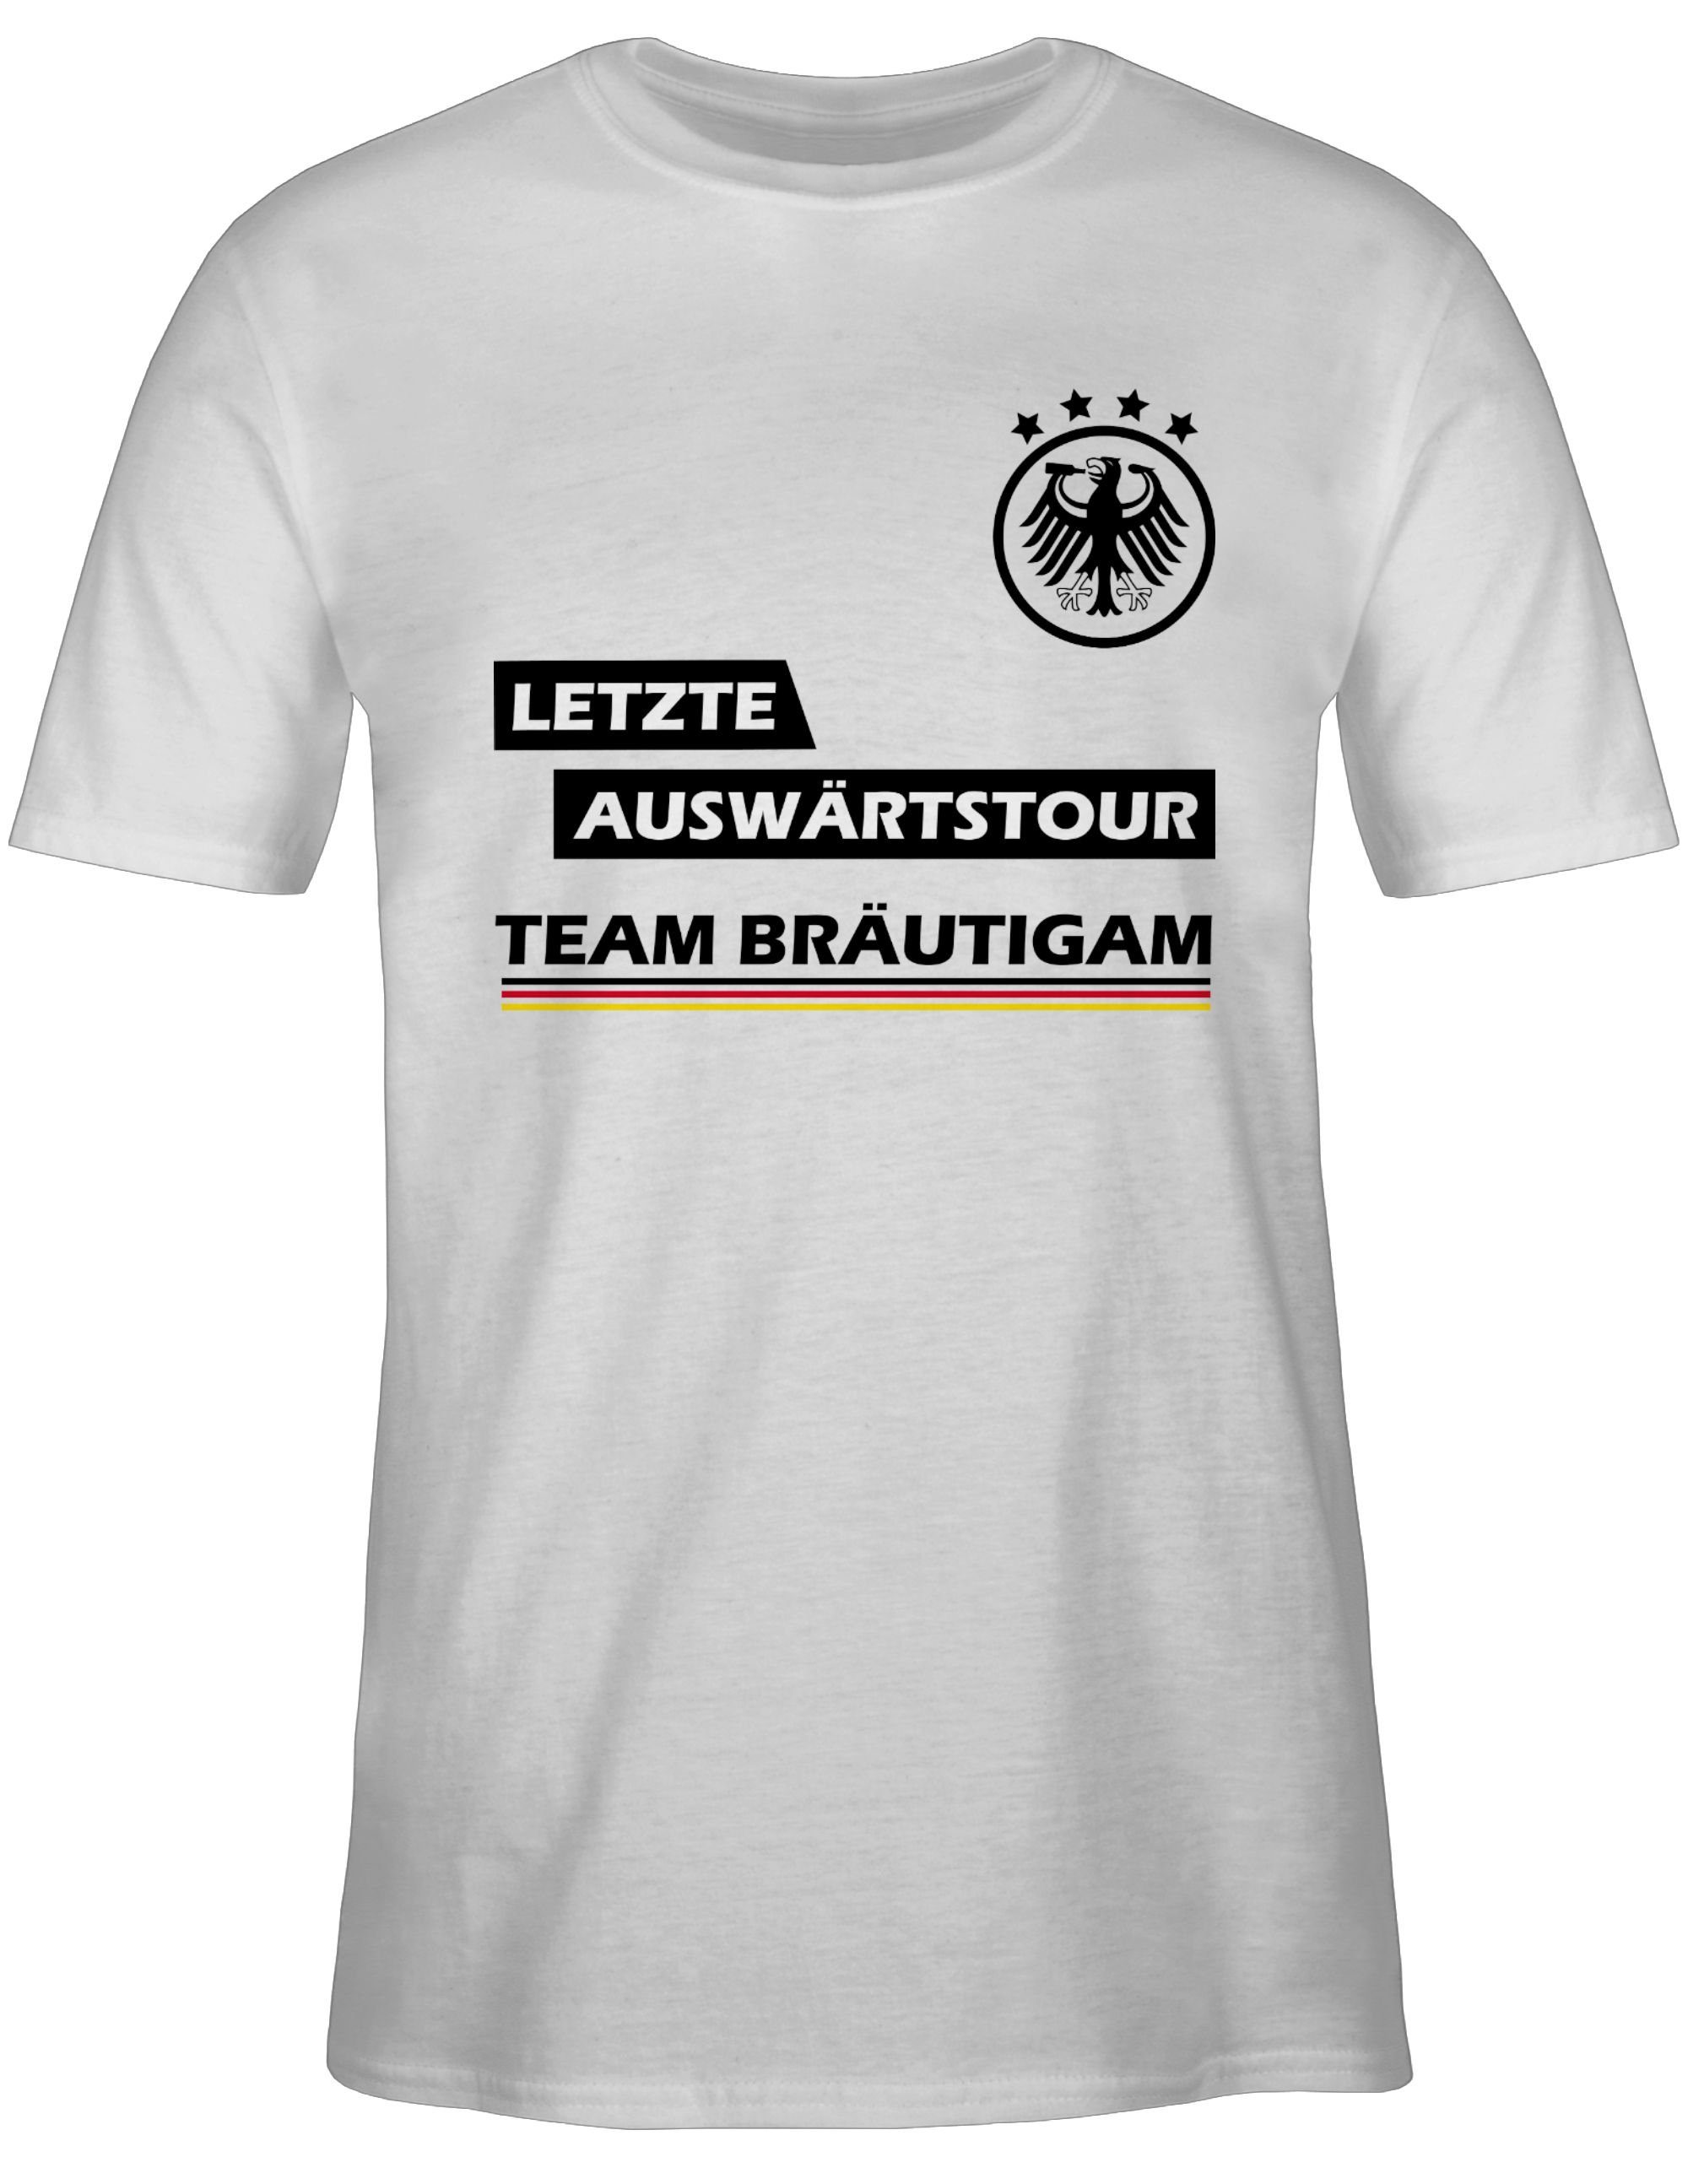 Shirtracer T-Shirt Letzte Männer Bräutigam Auswärtstour JGA 1 Weiß Team